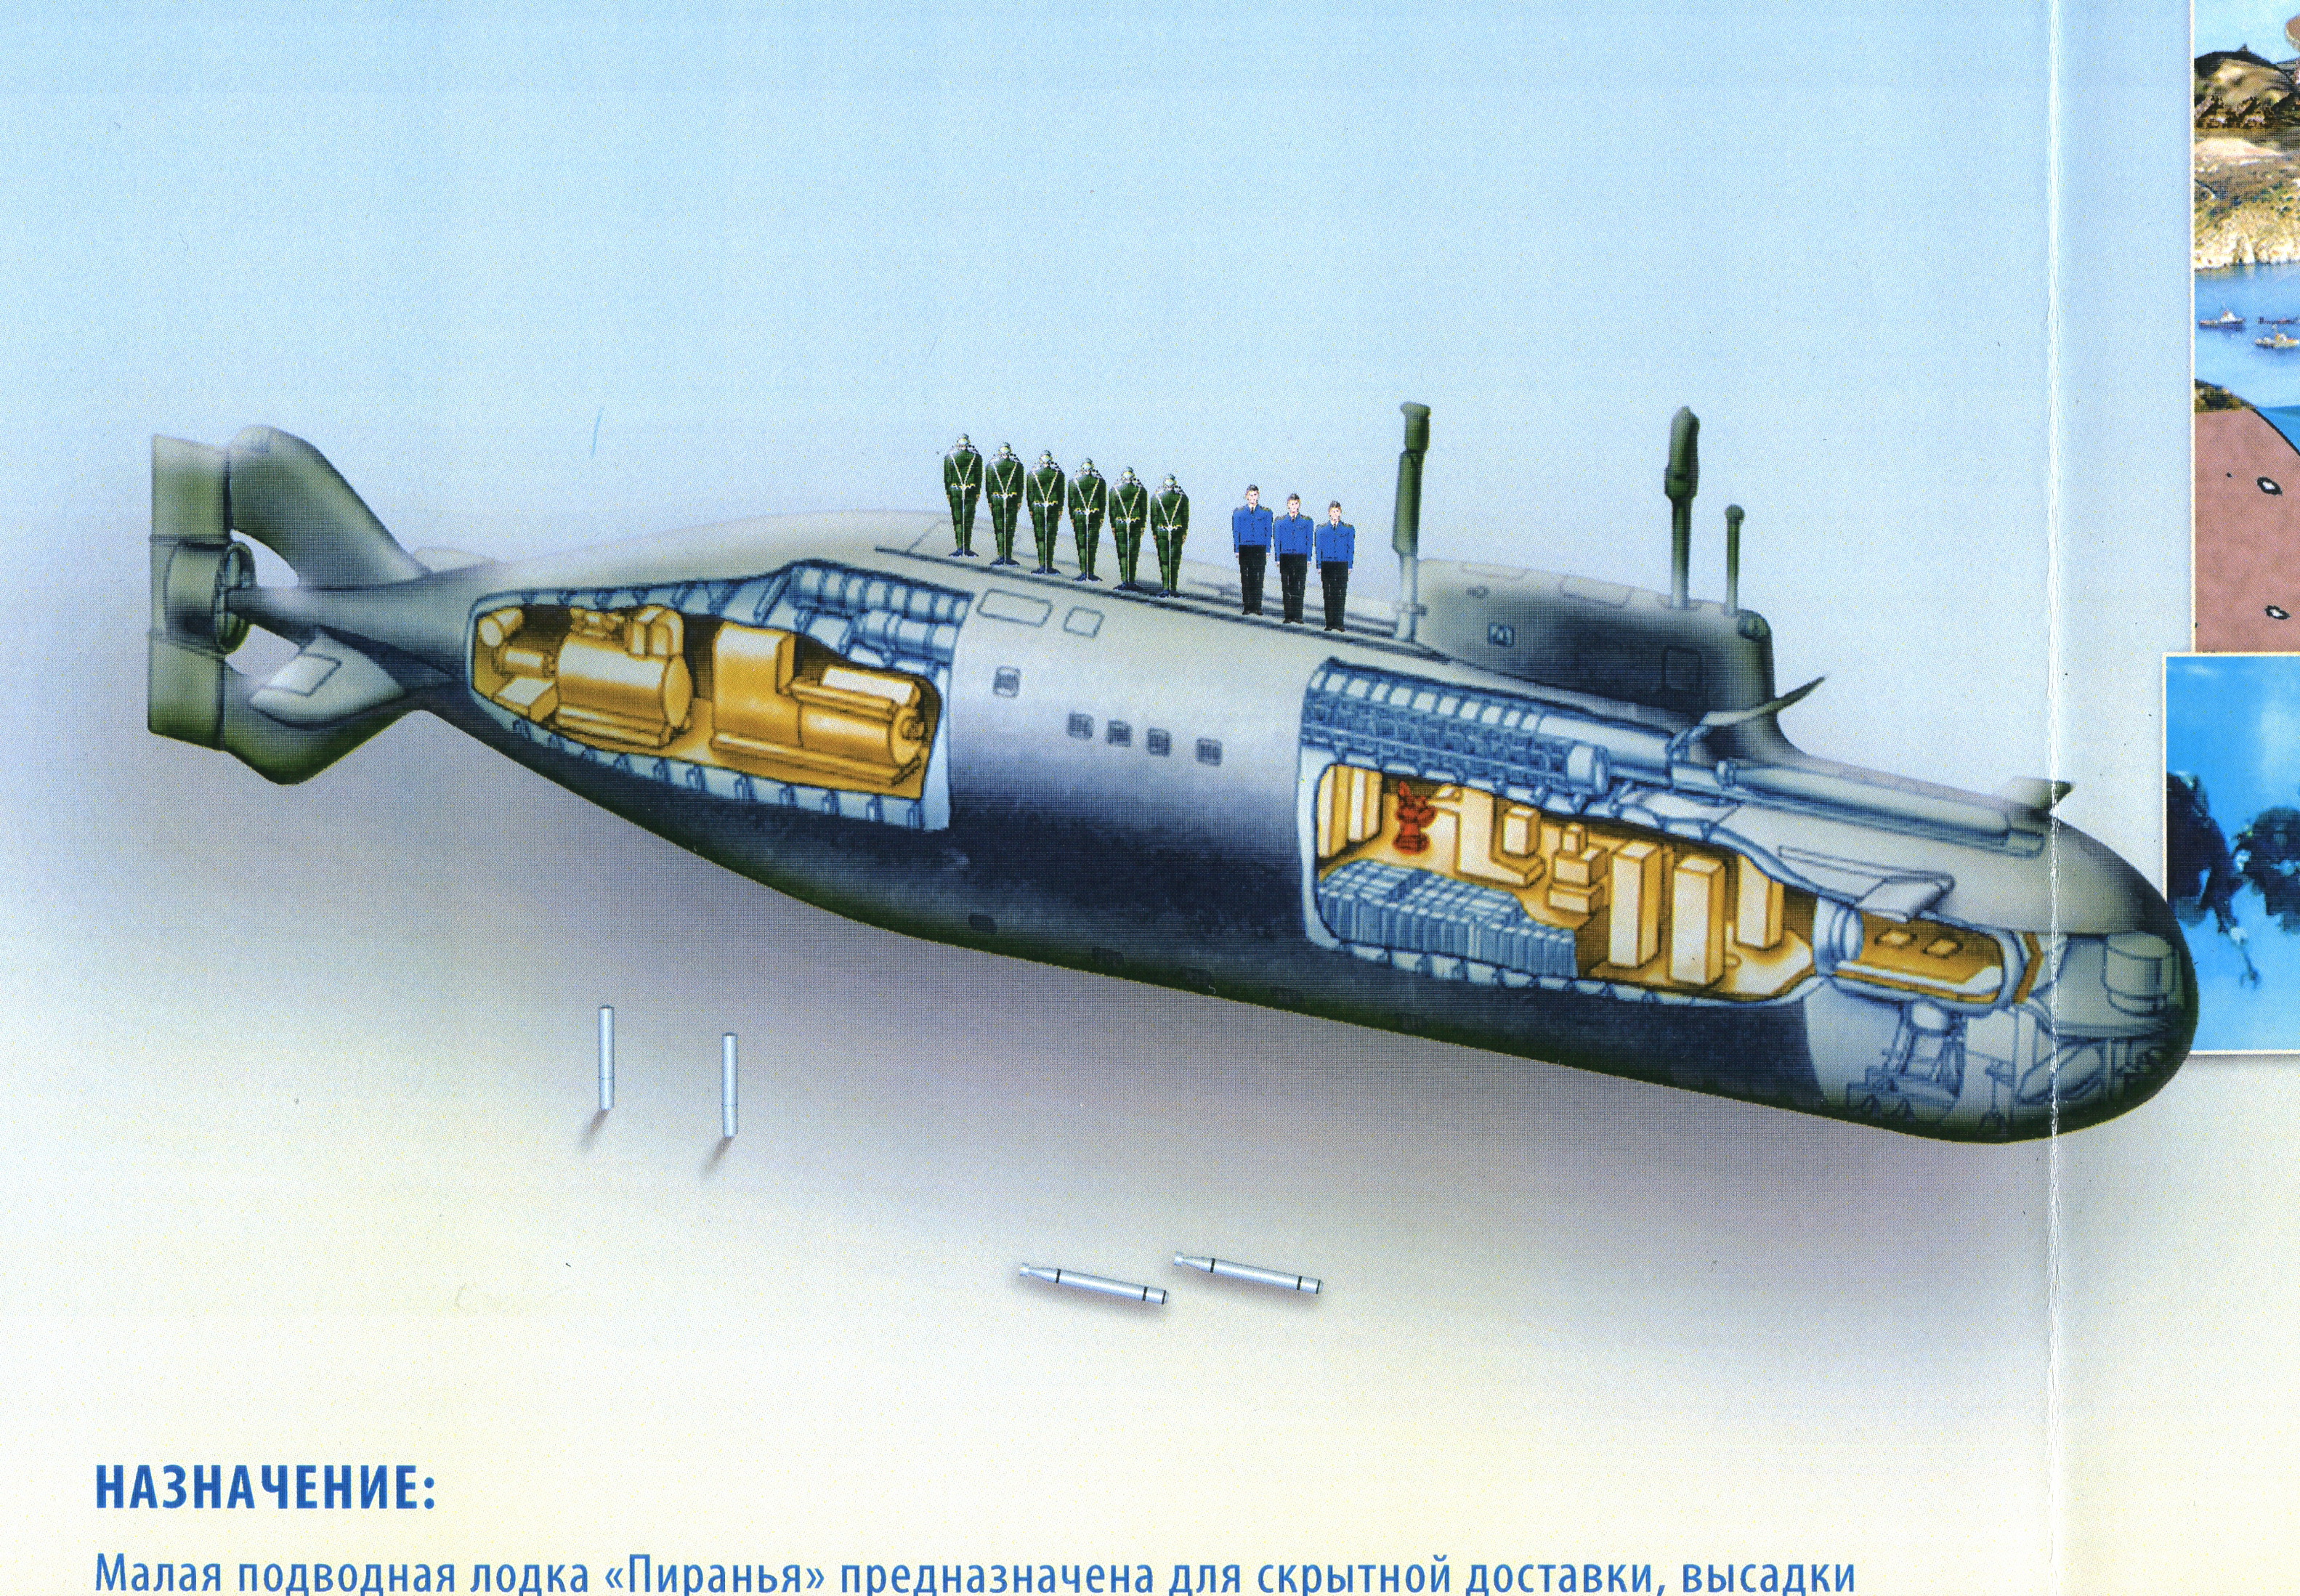 Малые пл. Пл Пиранья проект 865. Подводная лодка 865 Пиранья. Подлодка Пиранья проект 865. Подводные лодки проекта 907 «Тритон-1м».